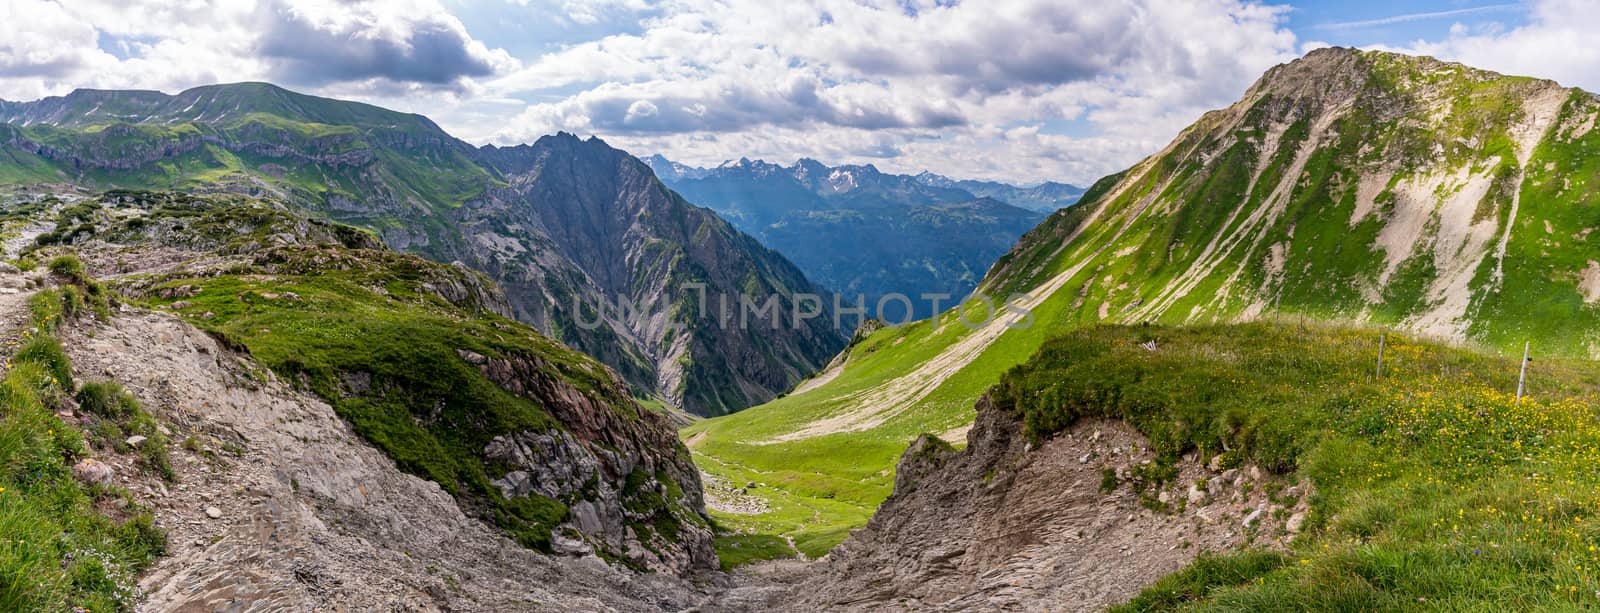 Fantastic hike in the Lechquellen Mountains in Vorarlberg Austria by mindscapephotos